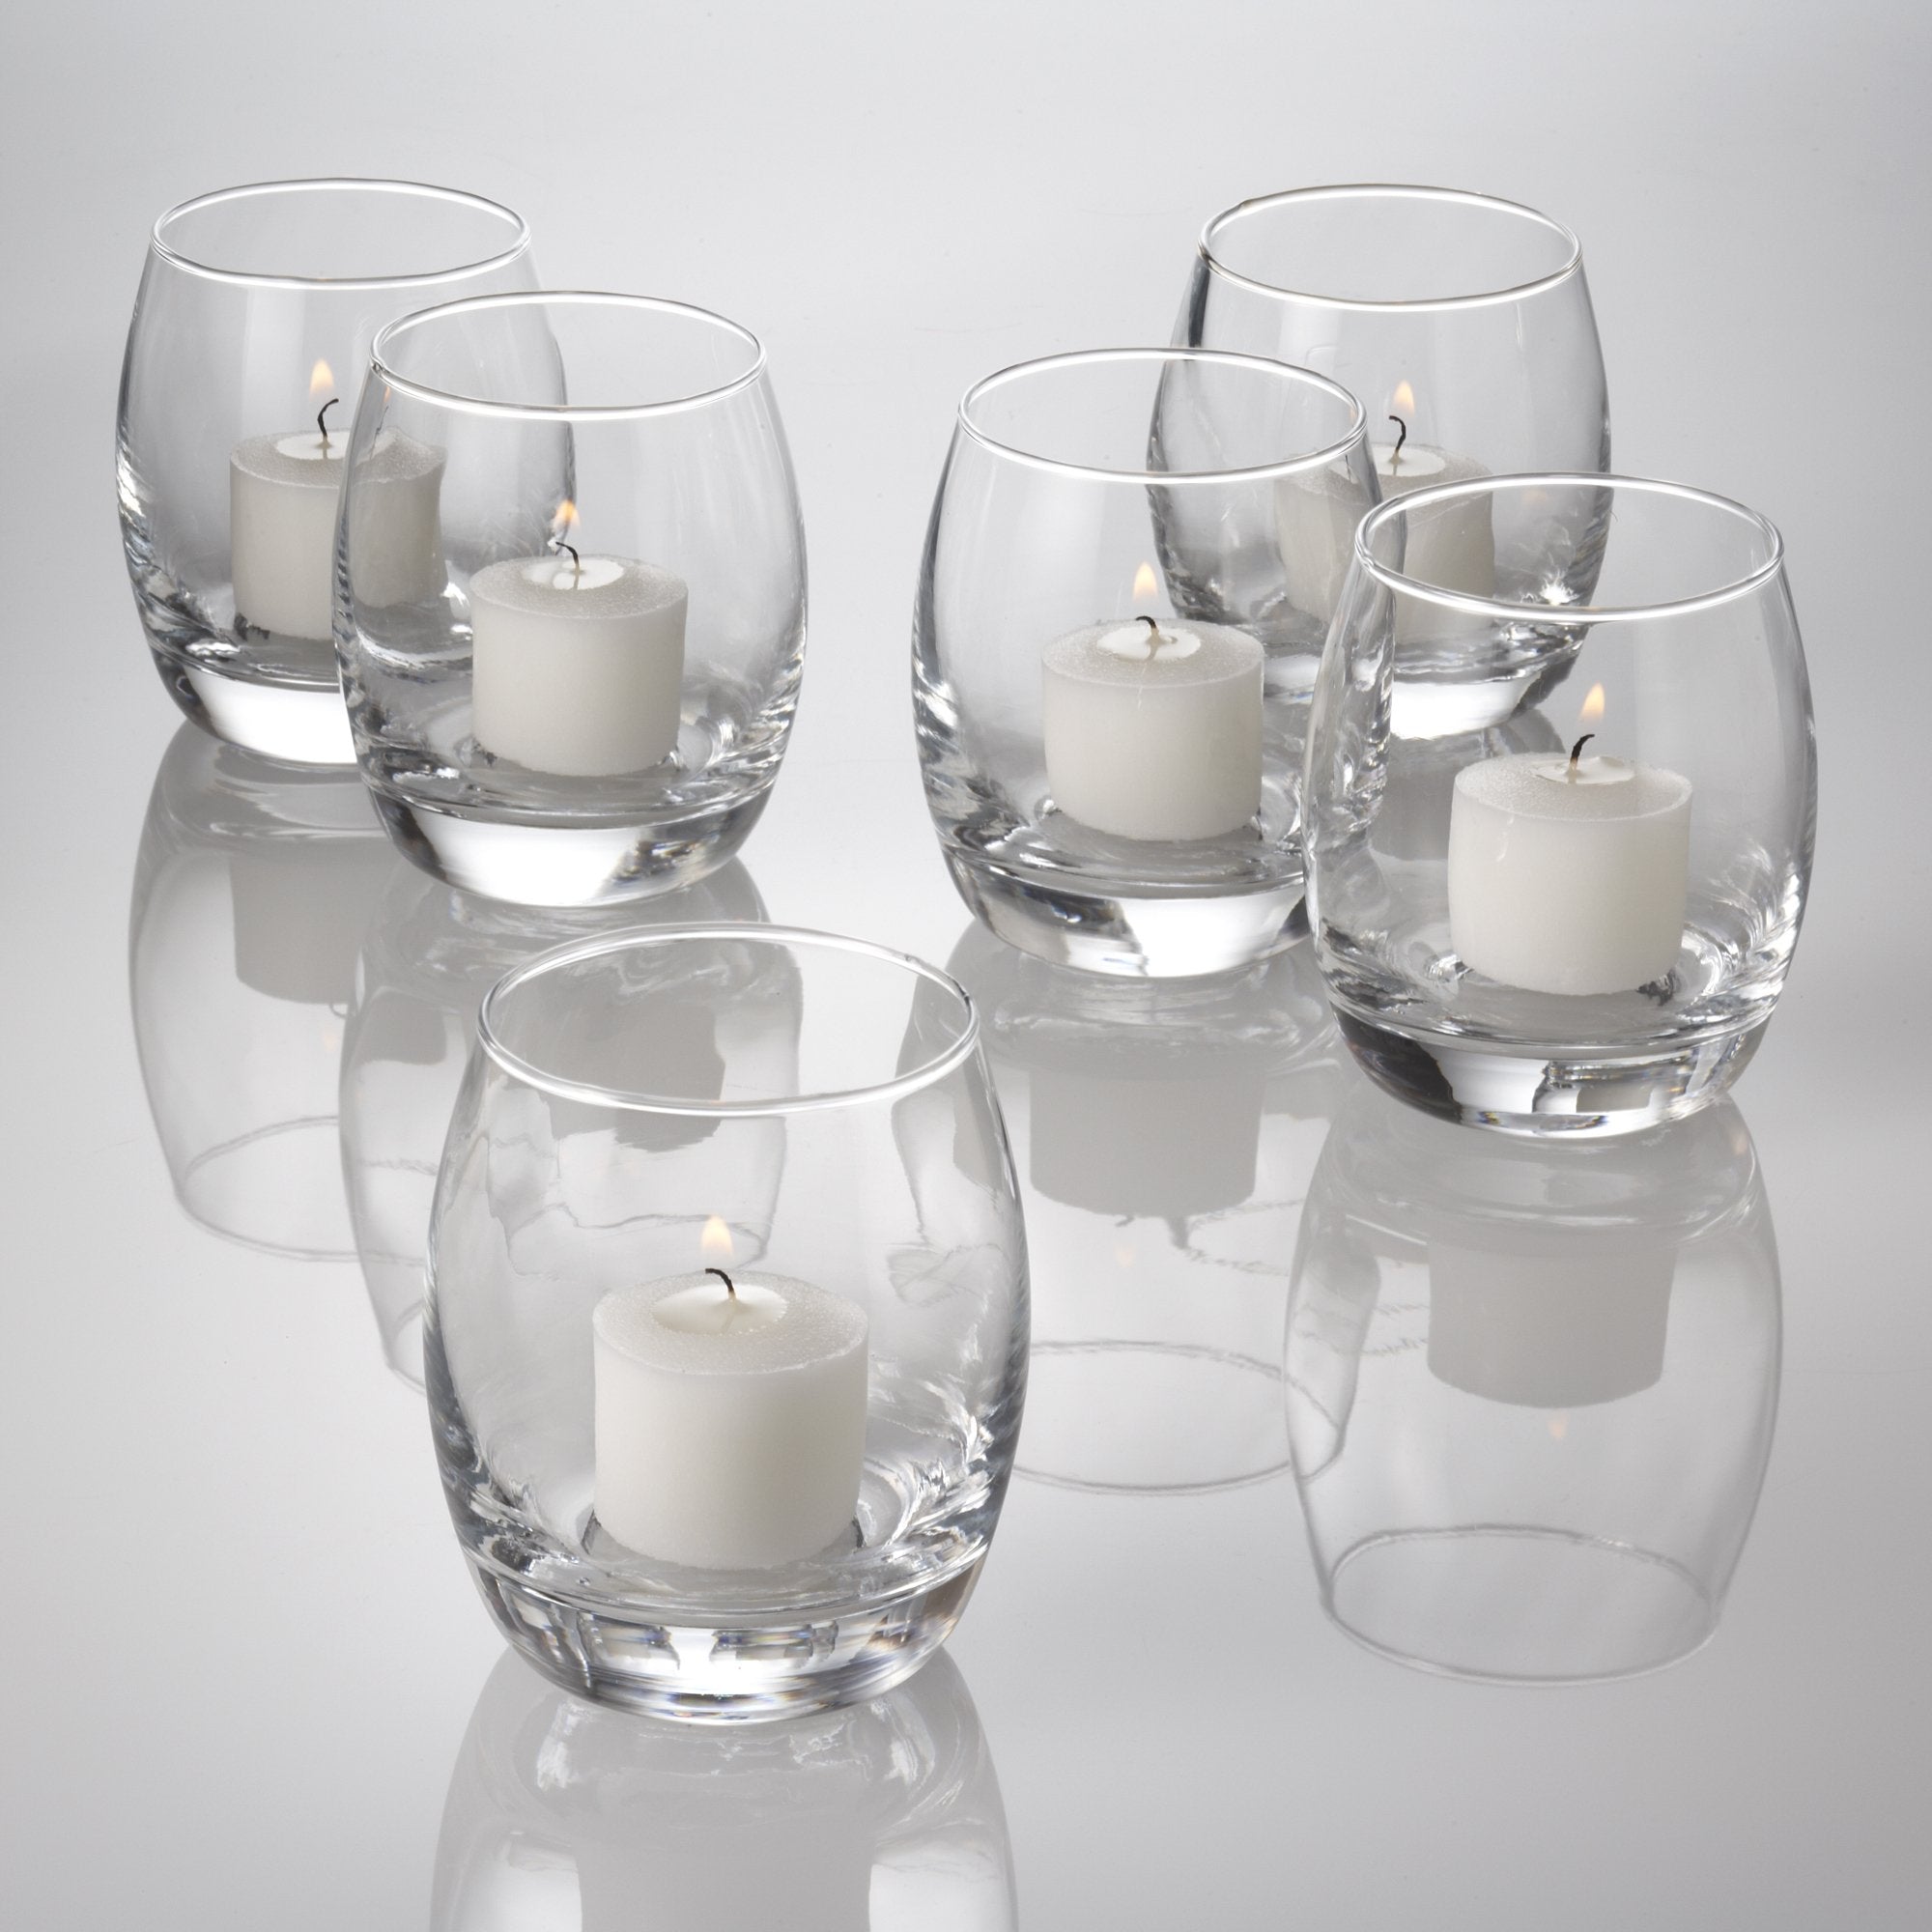 6 White Glass E14 Candle Cover - Euro Size. (19905)